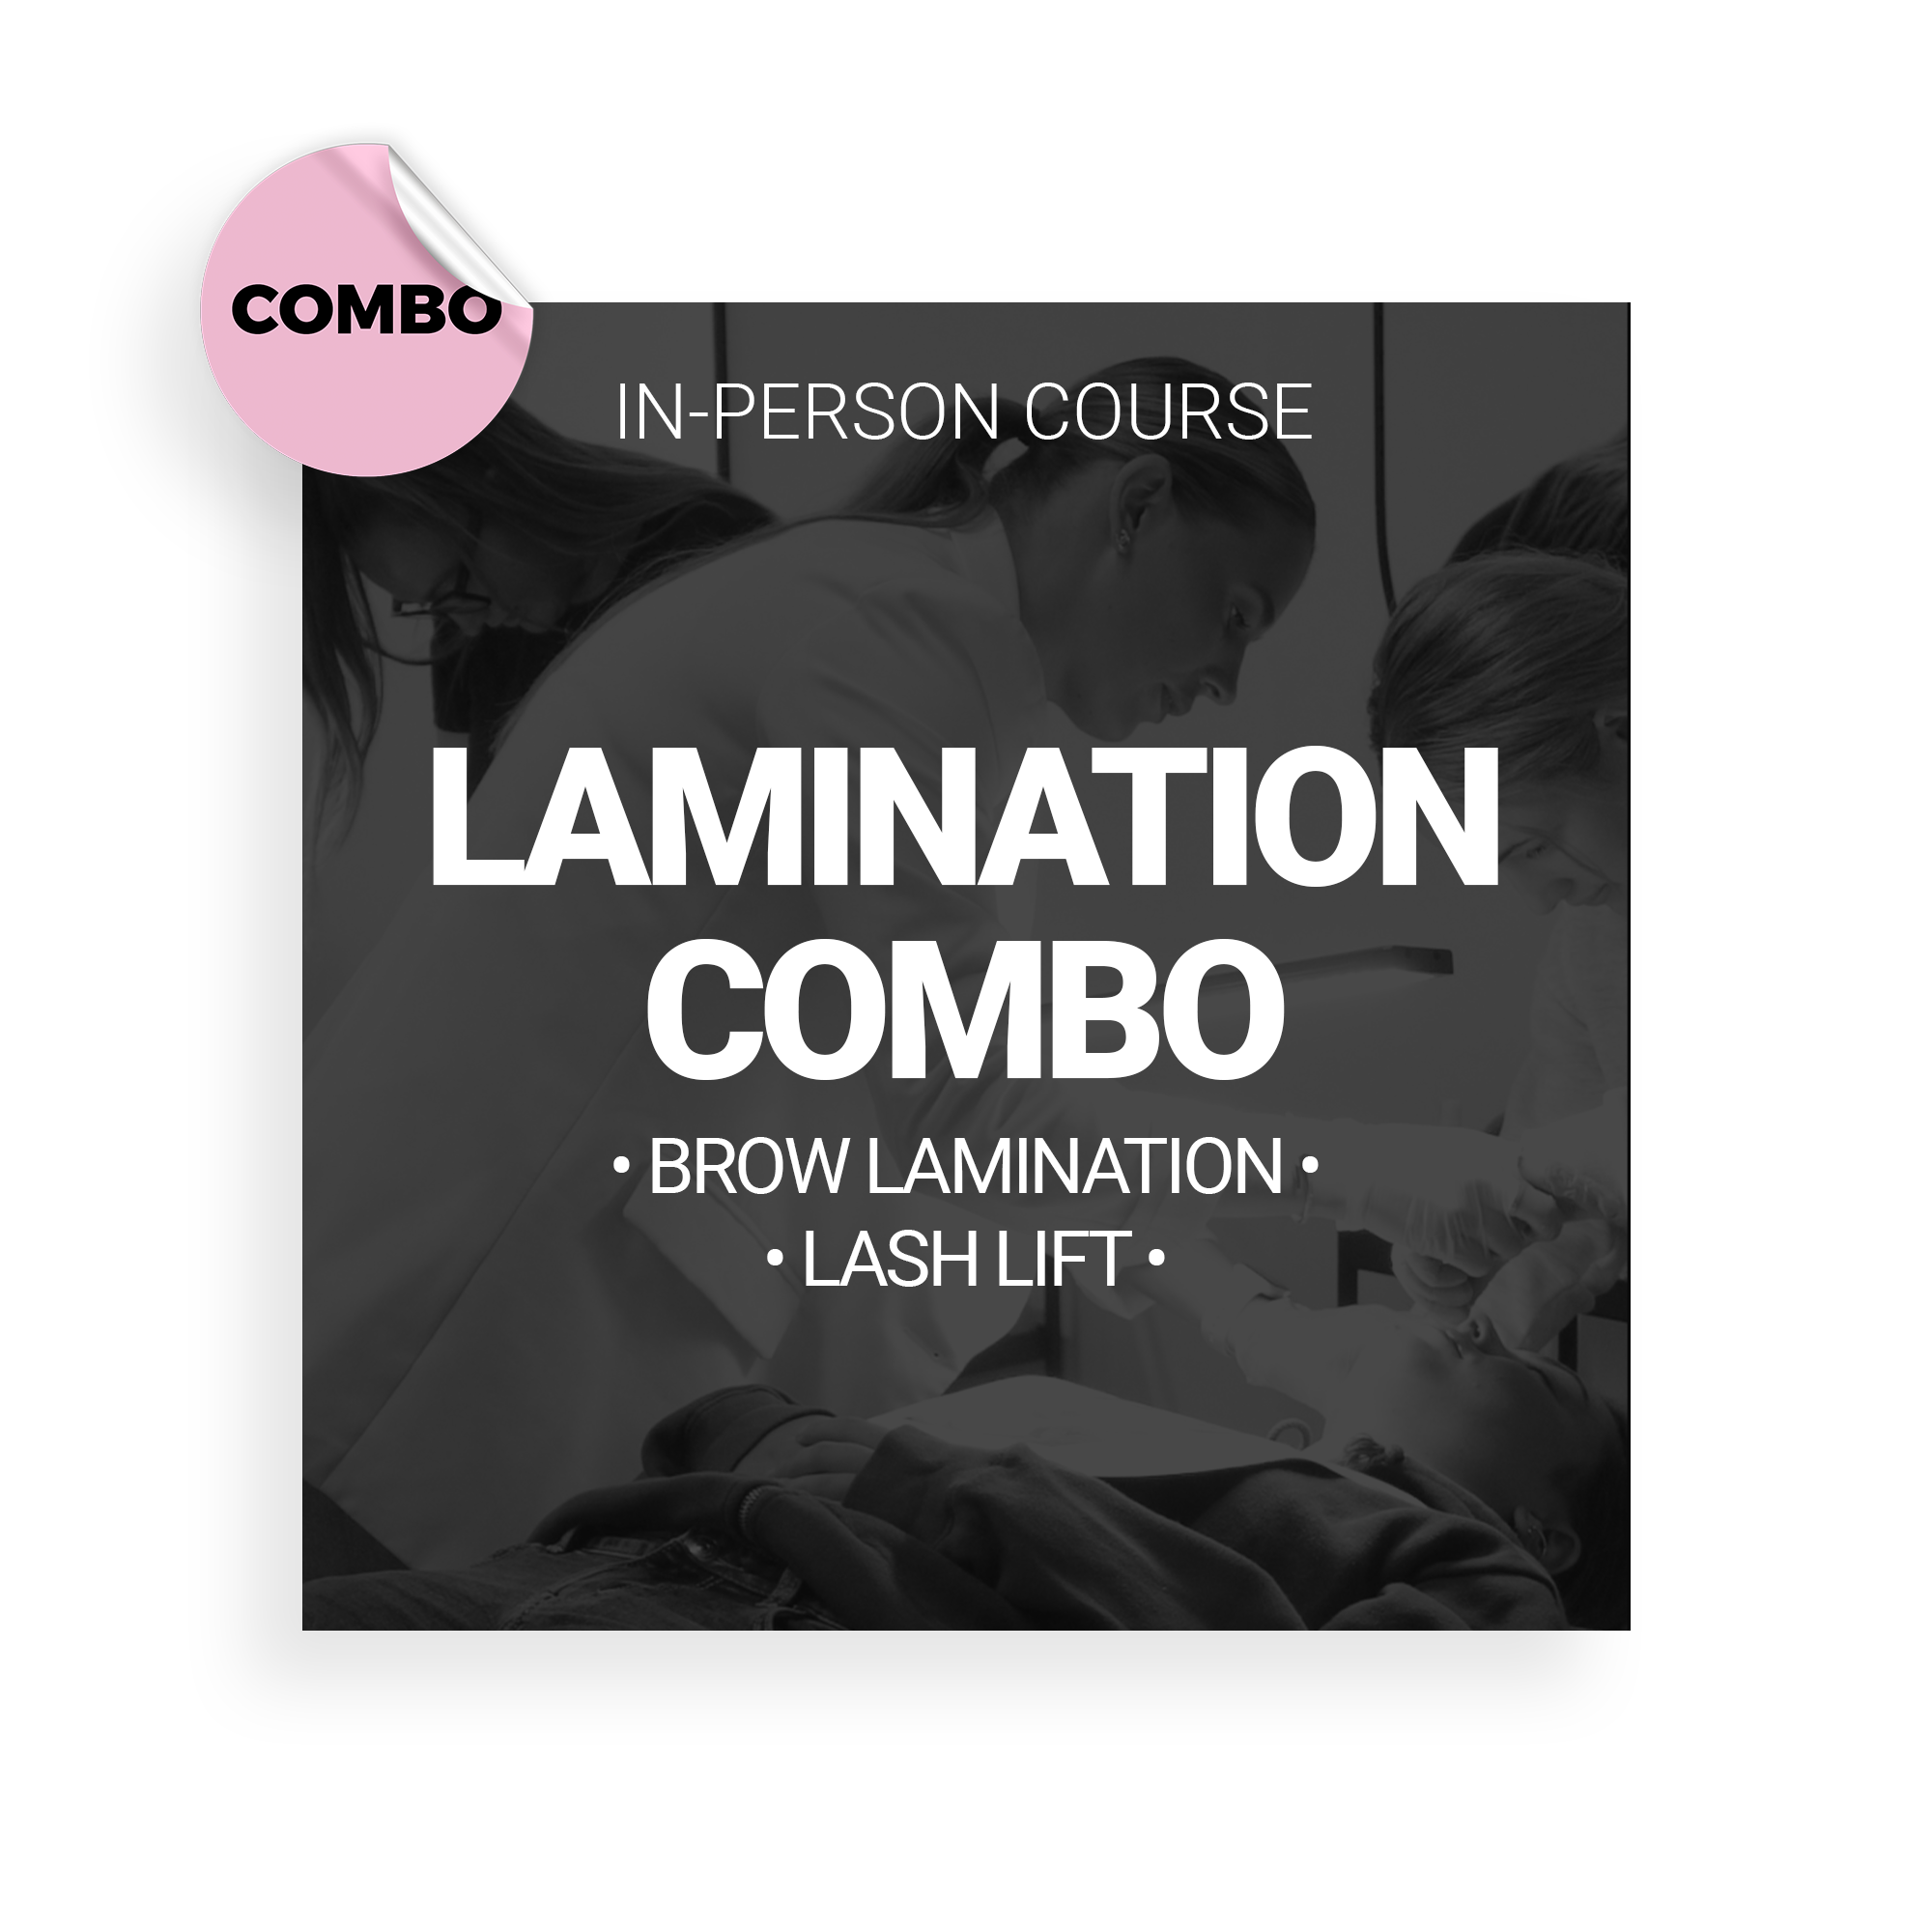 LAMINATION COMBO: BROW LAMINATION • LASH LIFT